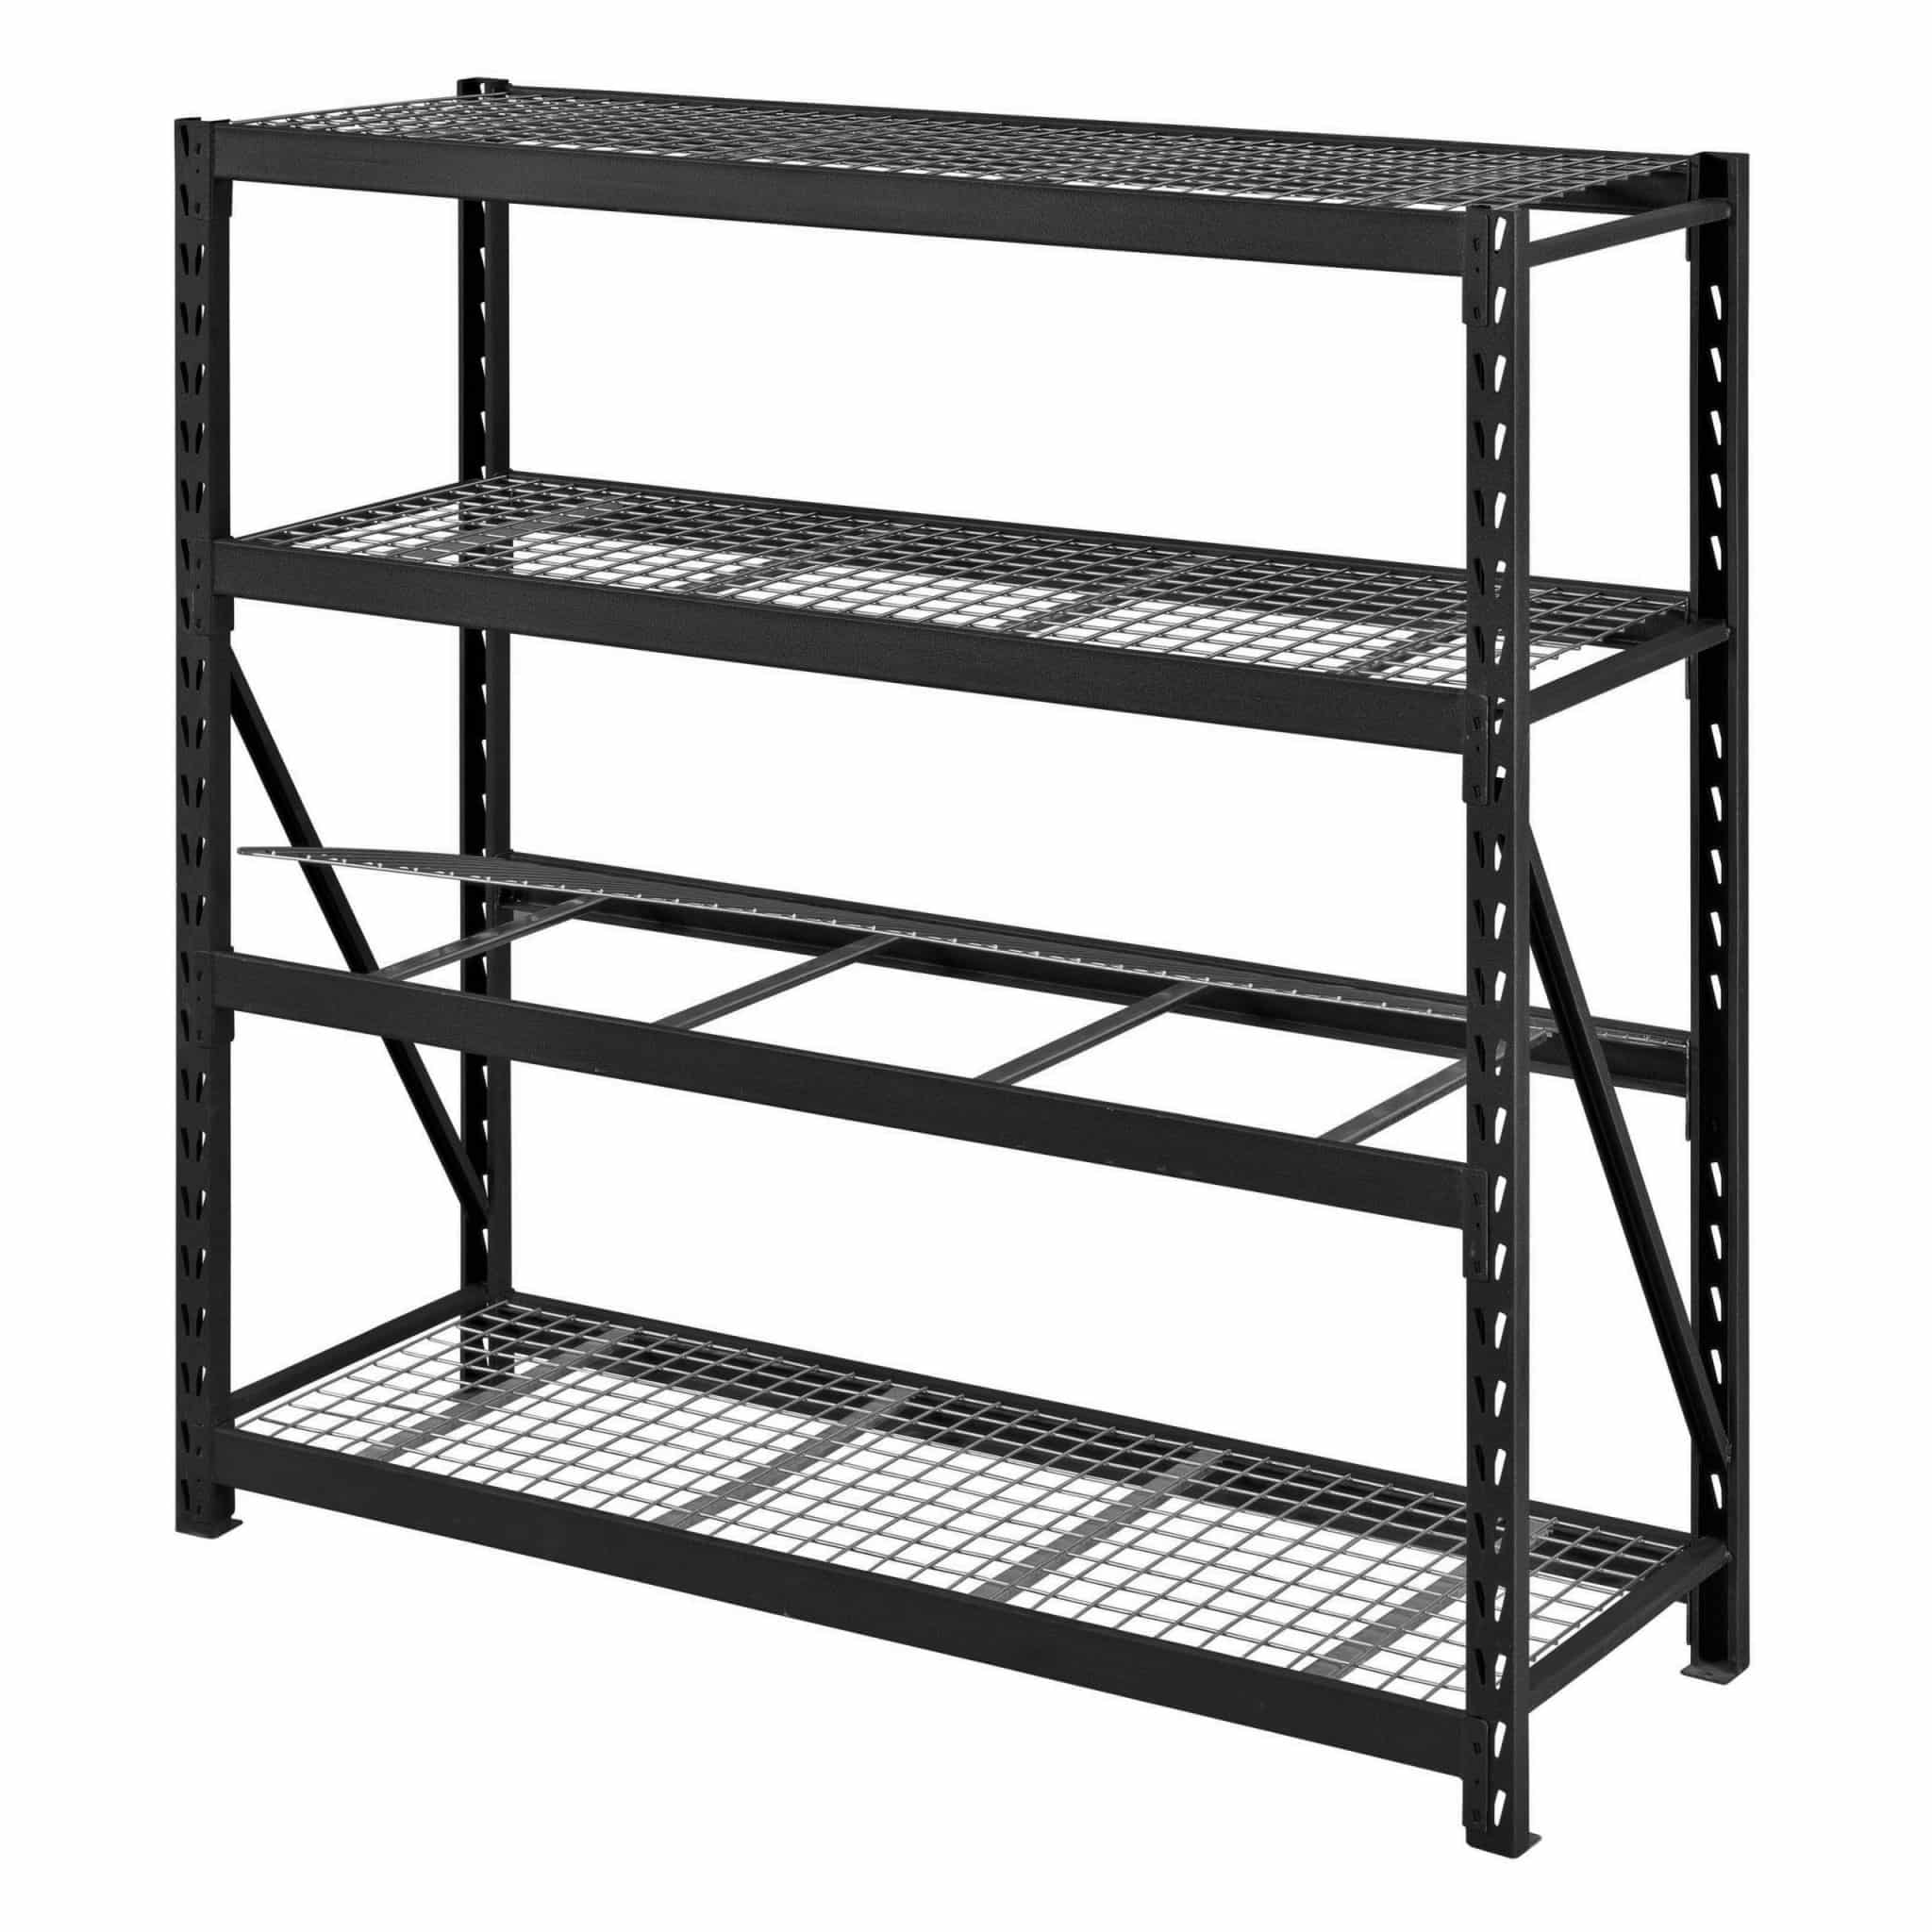 How To Assemble A 4 Shelf Storage Rack-Members Mark Storage Rack